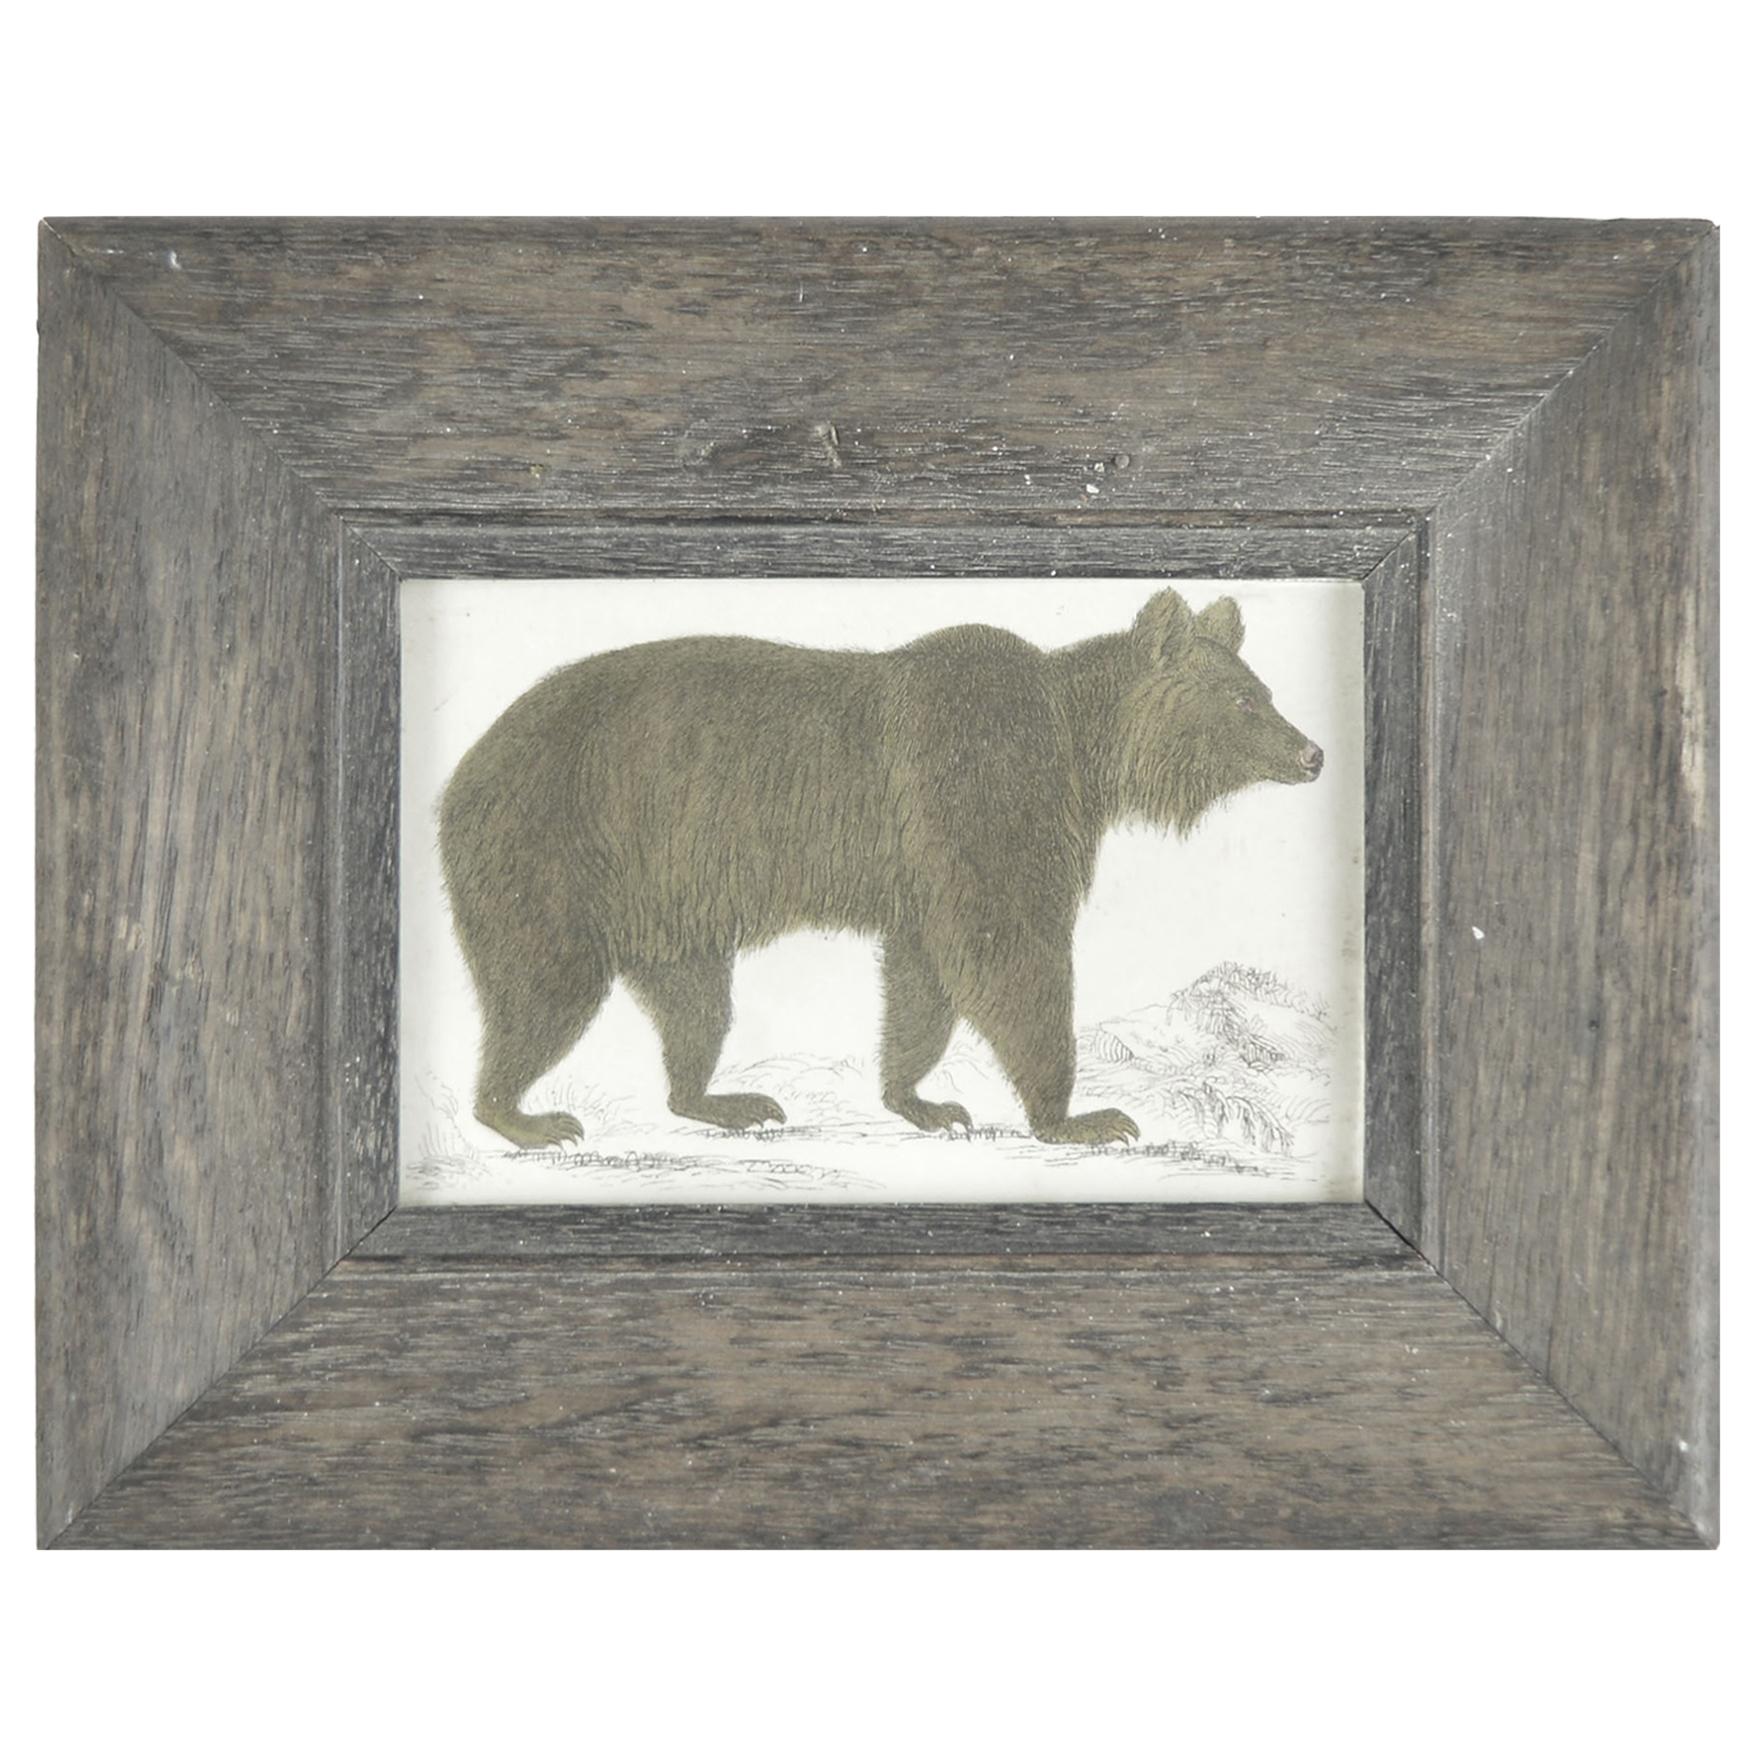 Original Antique Print of a Brown Bear, 1847